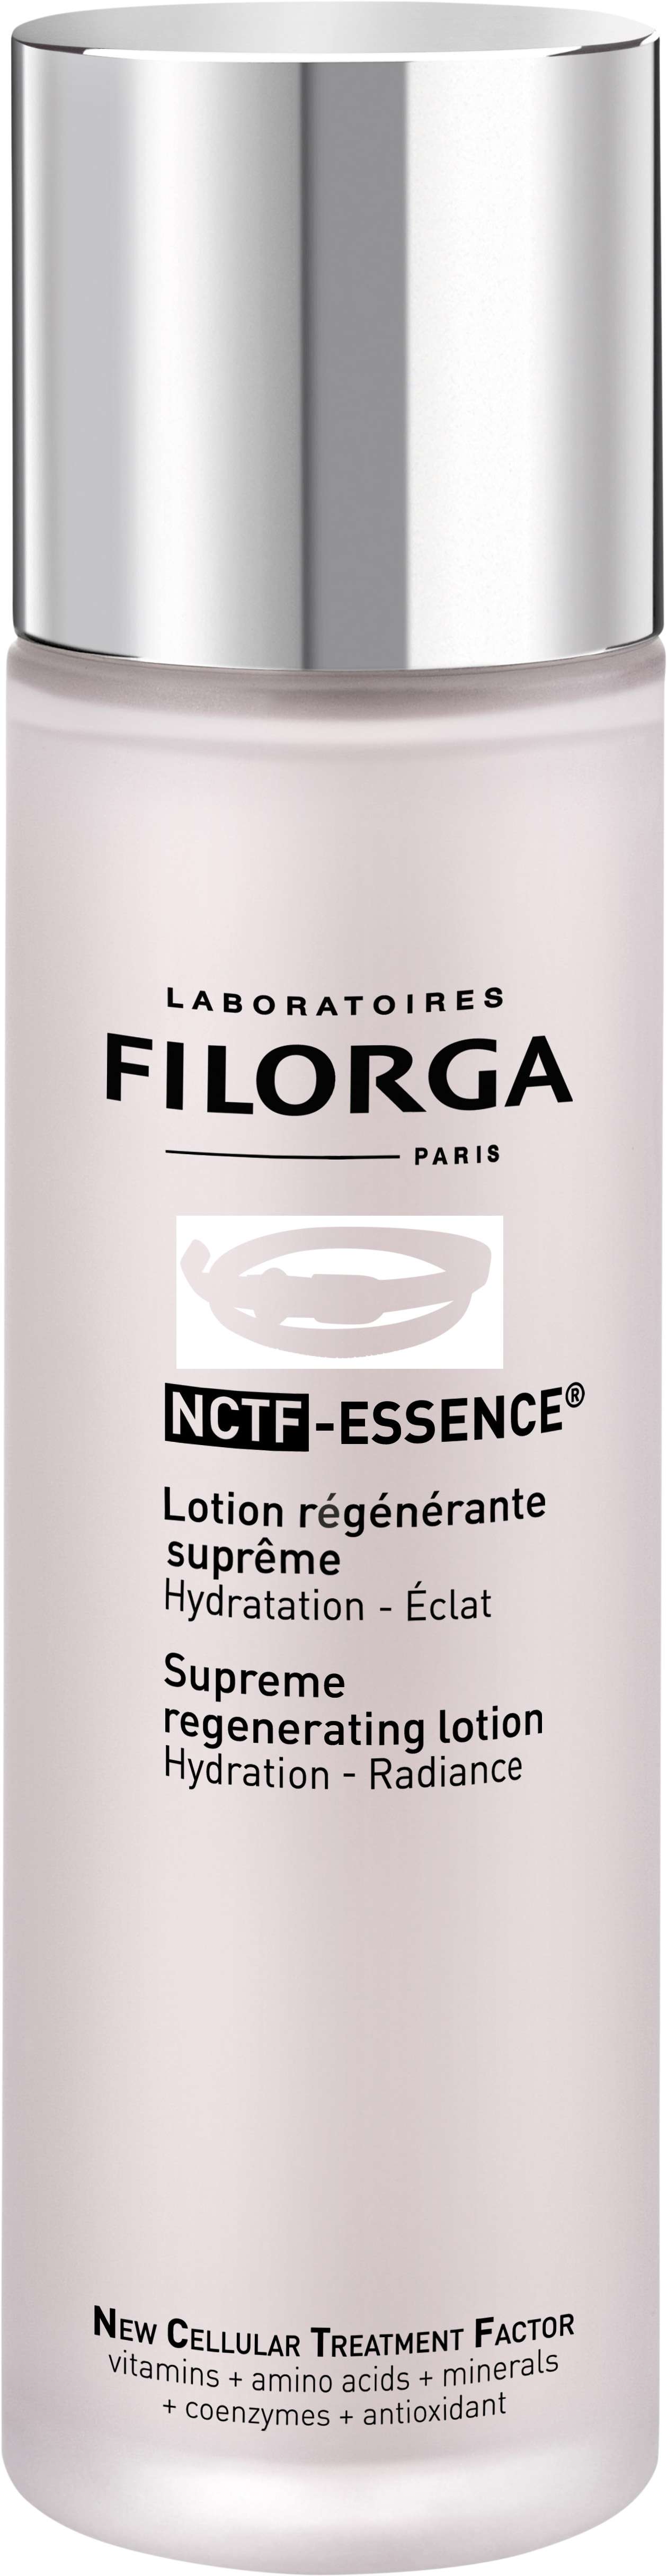 Filorga - NCTF Essence Lotion 150 ml